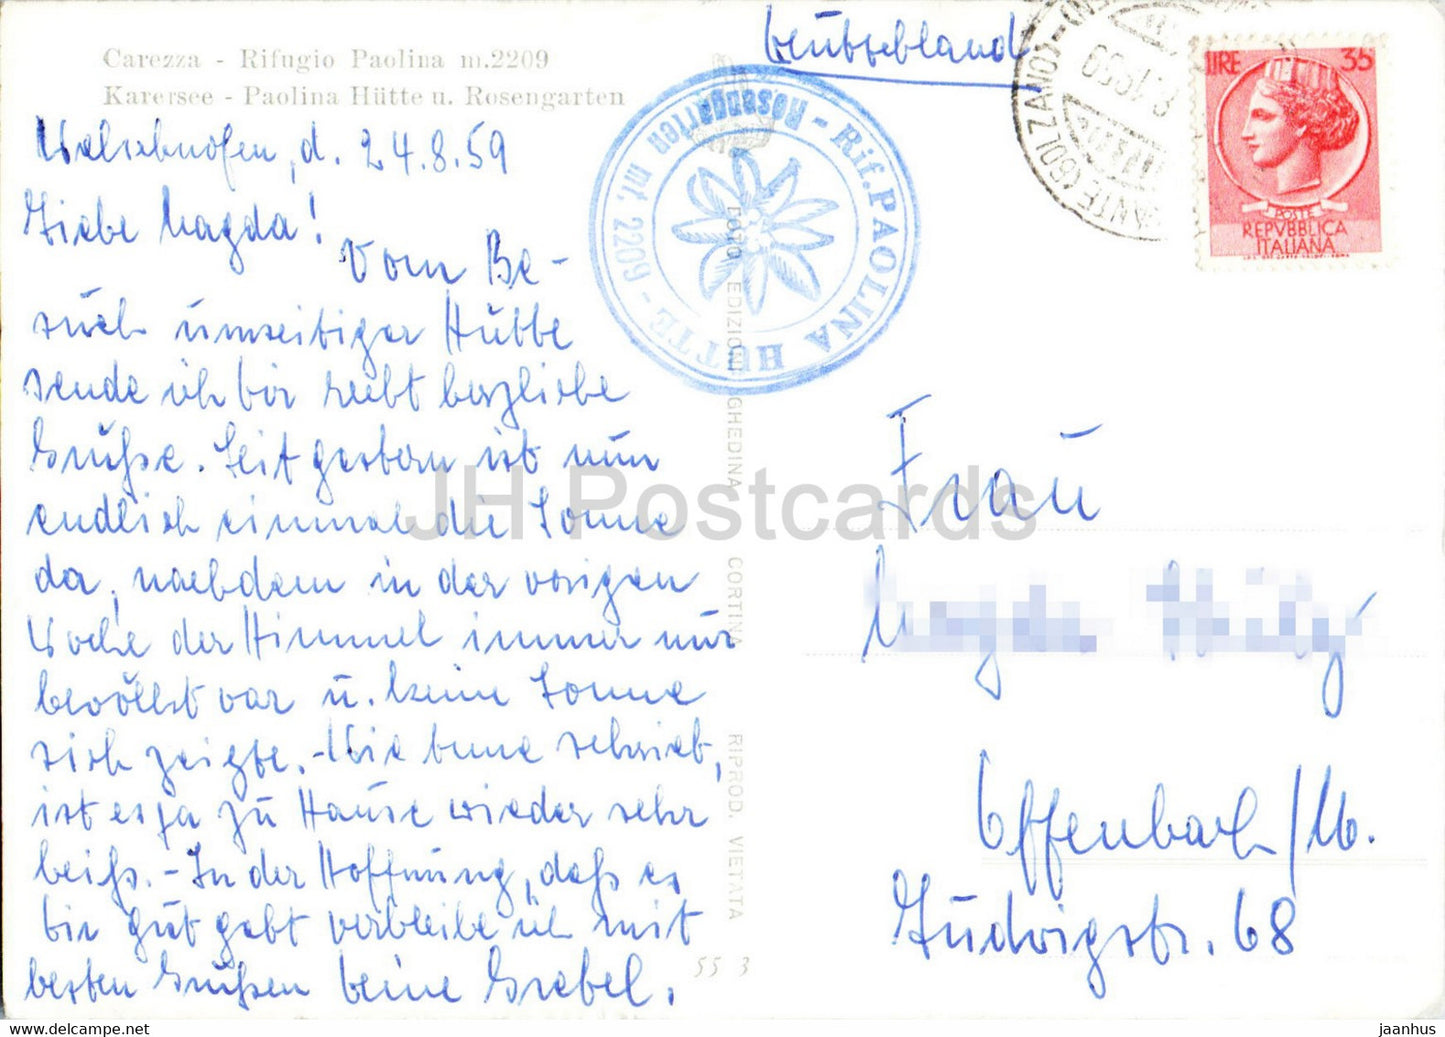 Carezza - Rifugio Paolina - Karersee - Paolina Hutte u Rosengarten - alte Postkarte - 1959 - Italien - gebraucht